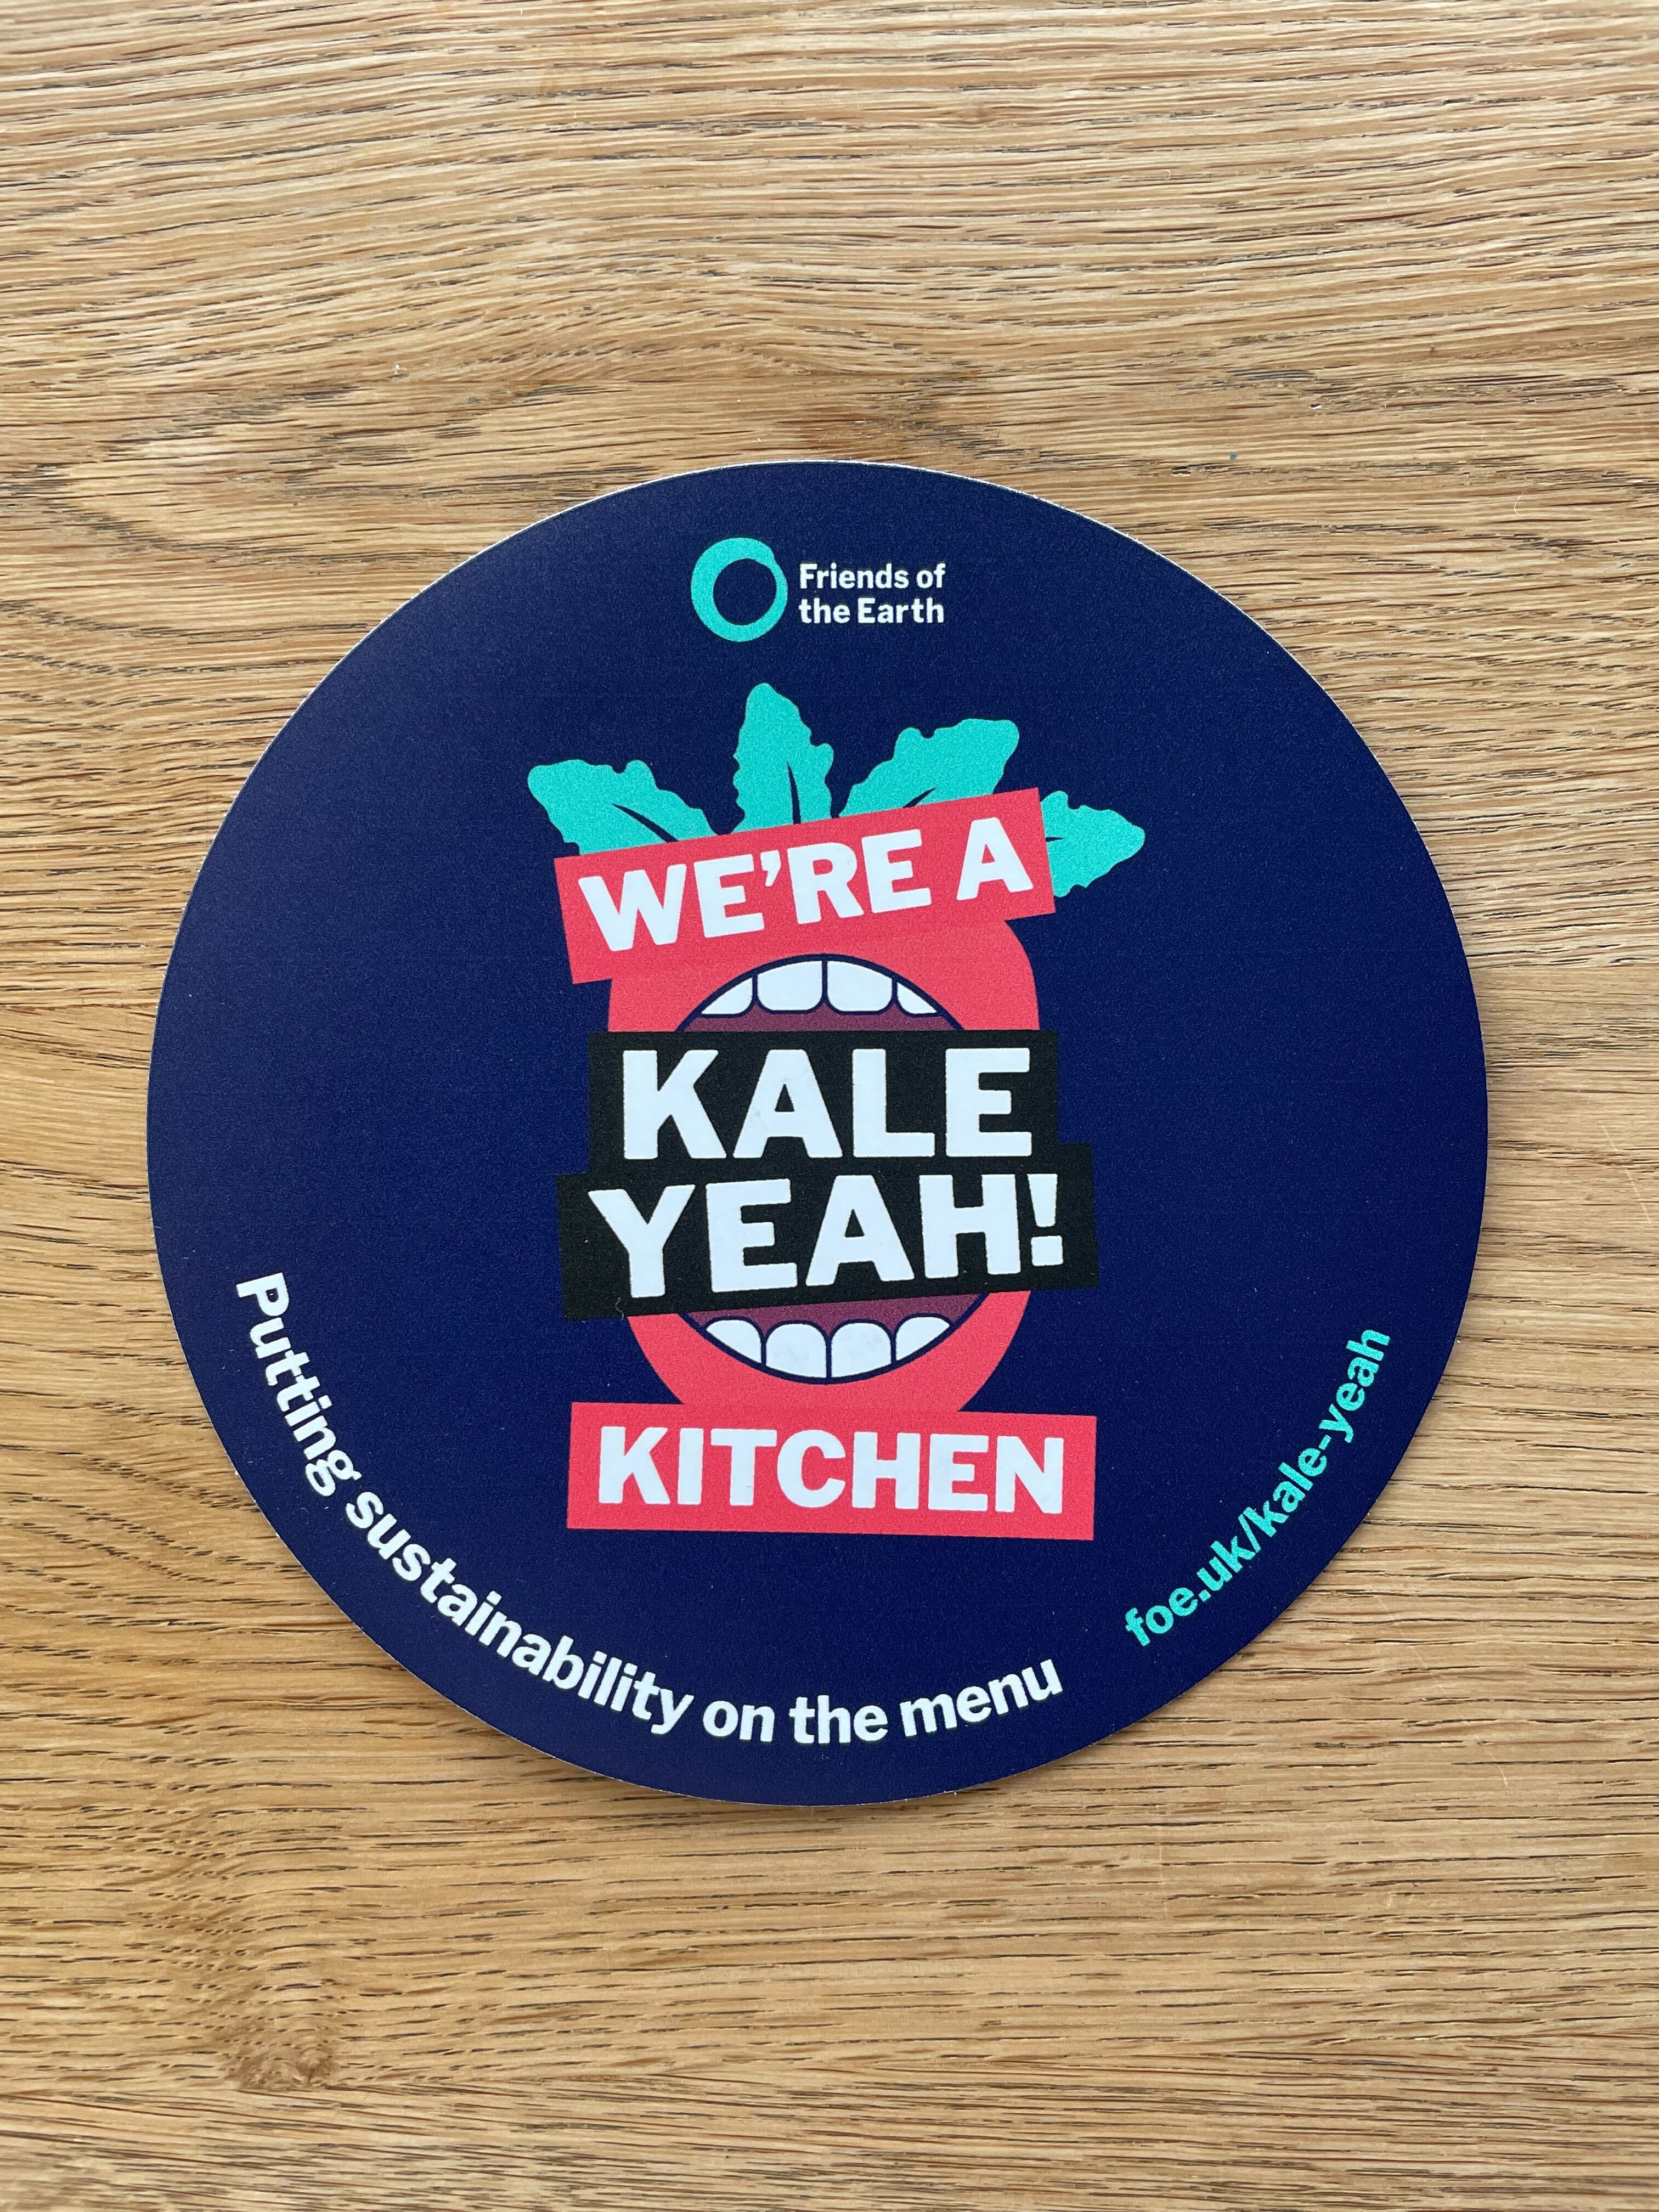 Circular window sticker that says "We're a Kale Yeah! Kitchen"